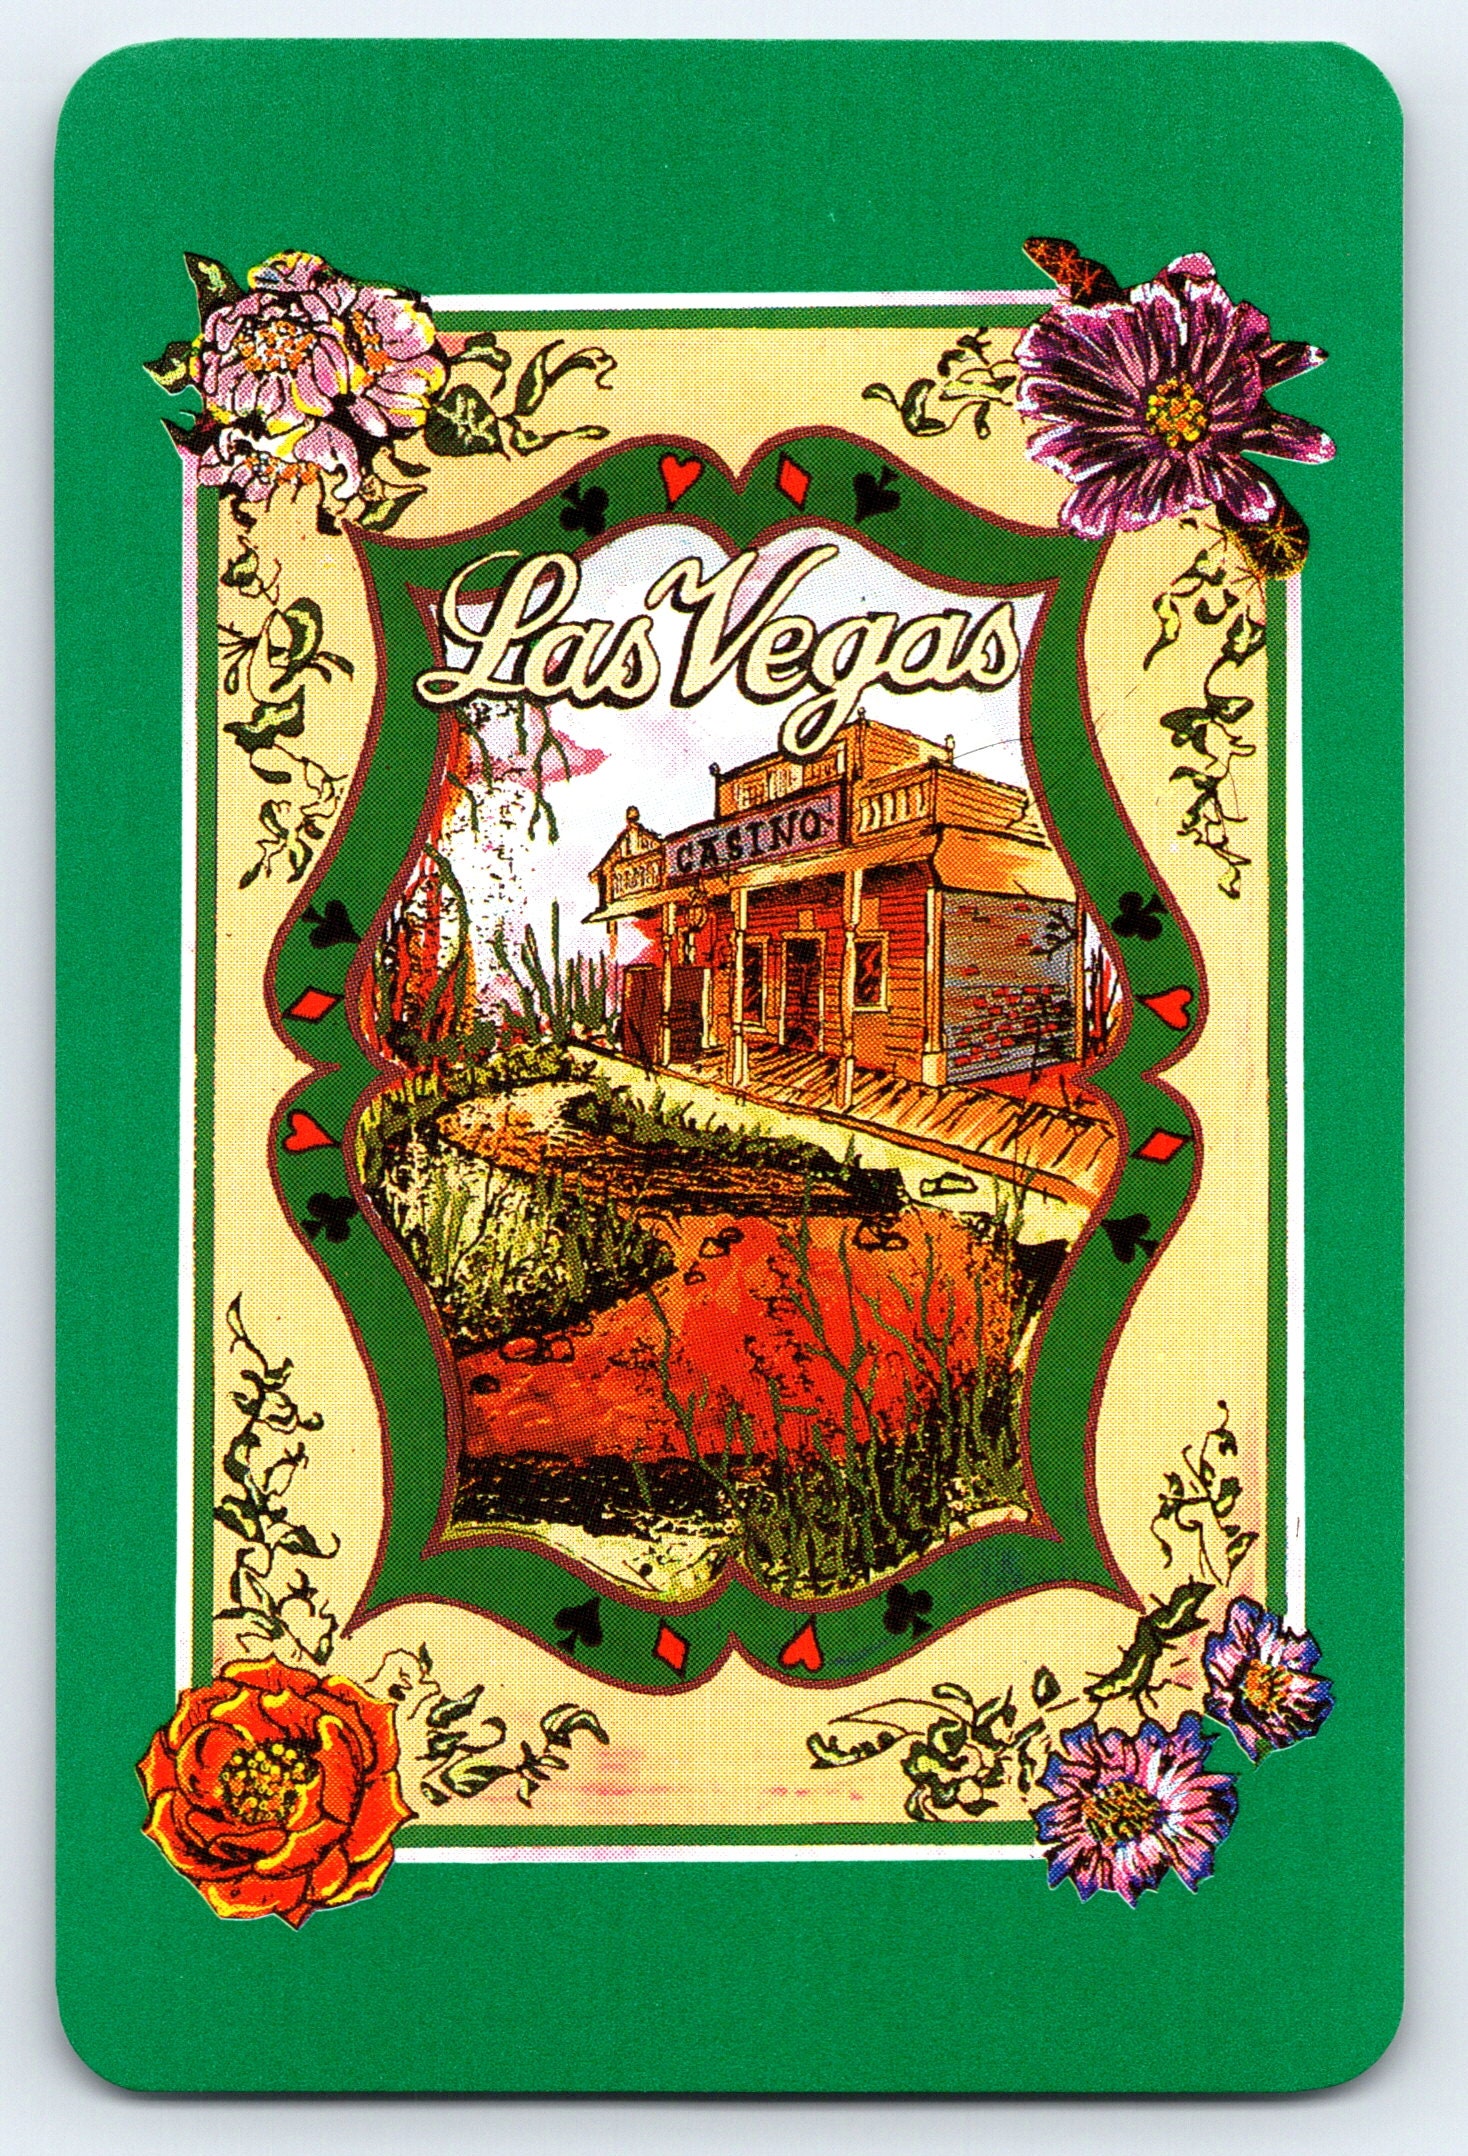 Bally's Las Vegas Casino Matching Showgirl Dice, Deck Playing Cards &  Matchbook